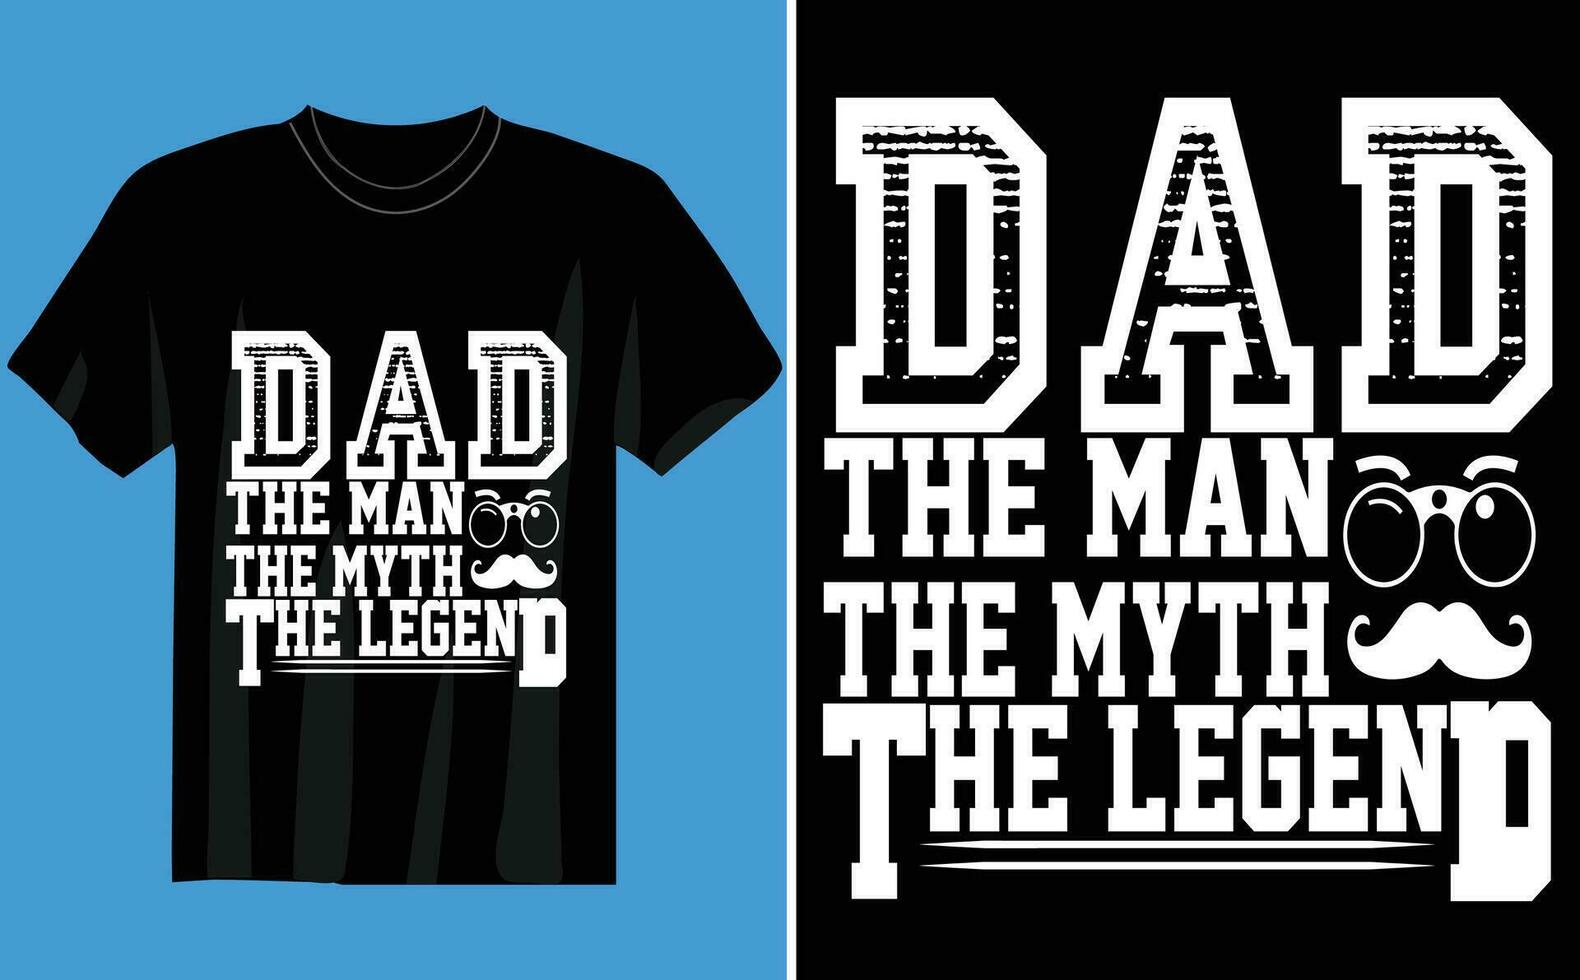 vader de Mens de mythe de legende t-shirt ontwerp of vader dag poster ontwerp grappig vader citaten vector